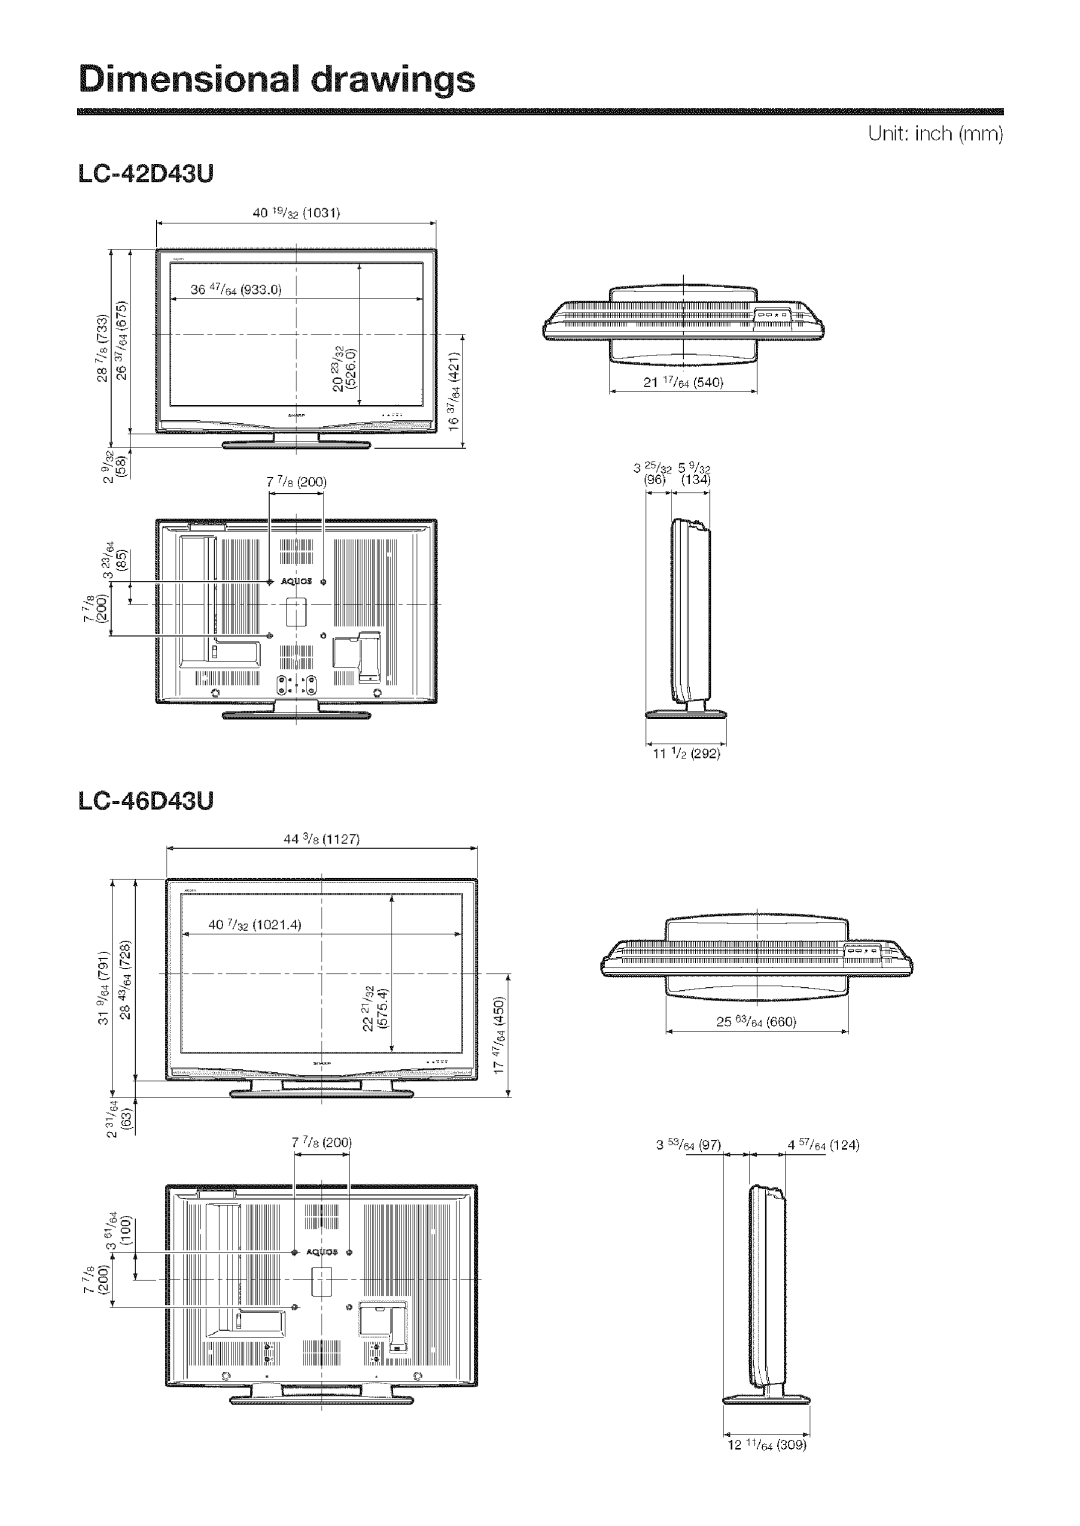 Sharp LC 52D43U, LC 42D43U operation manual Dimensional drawings, Unit inch mm 